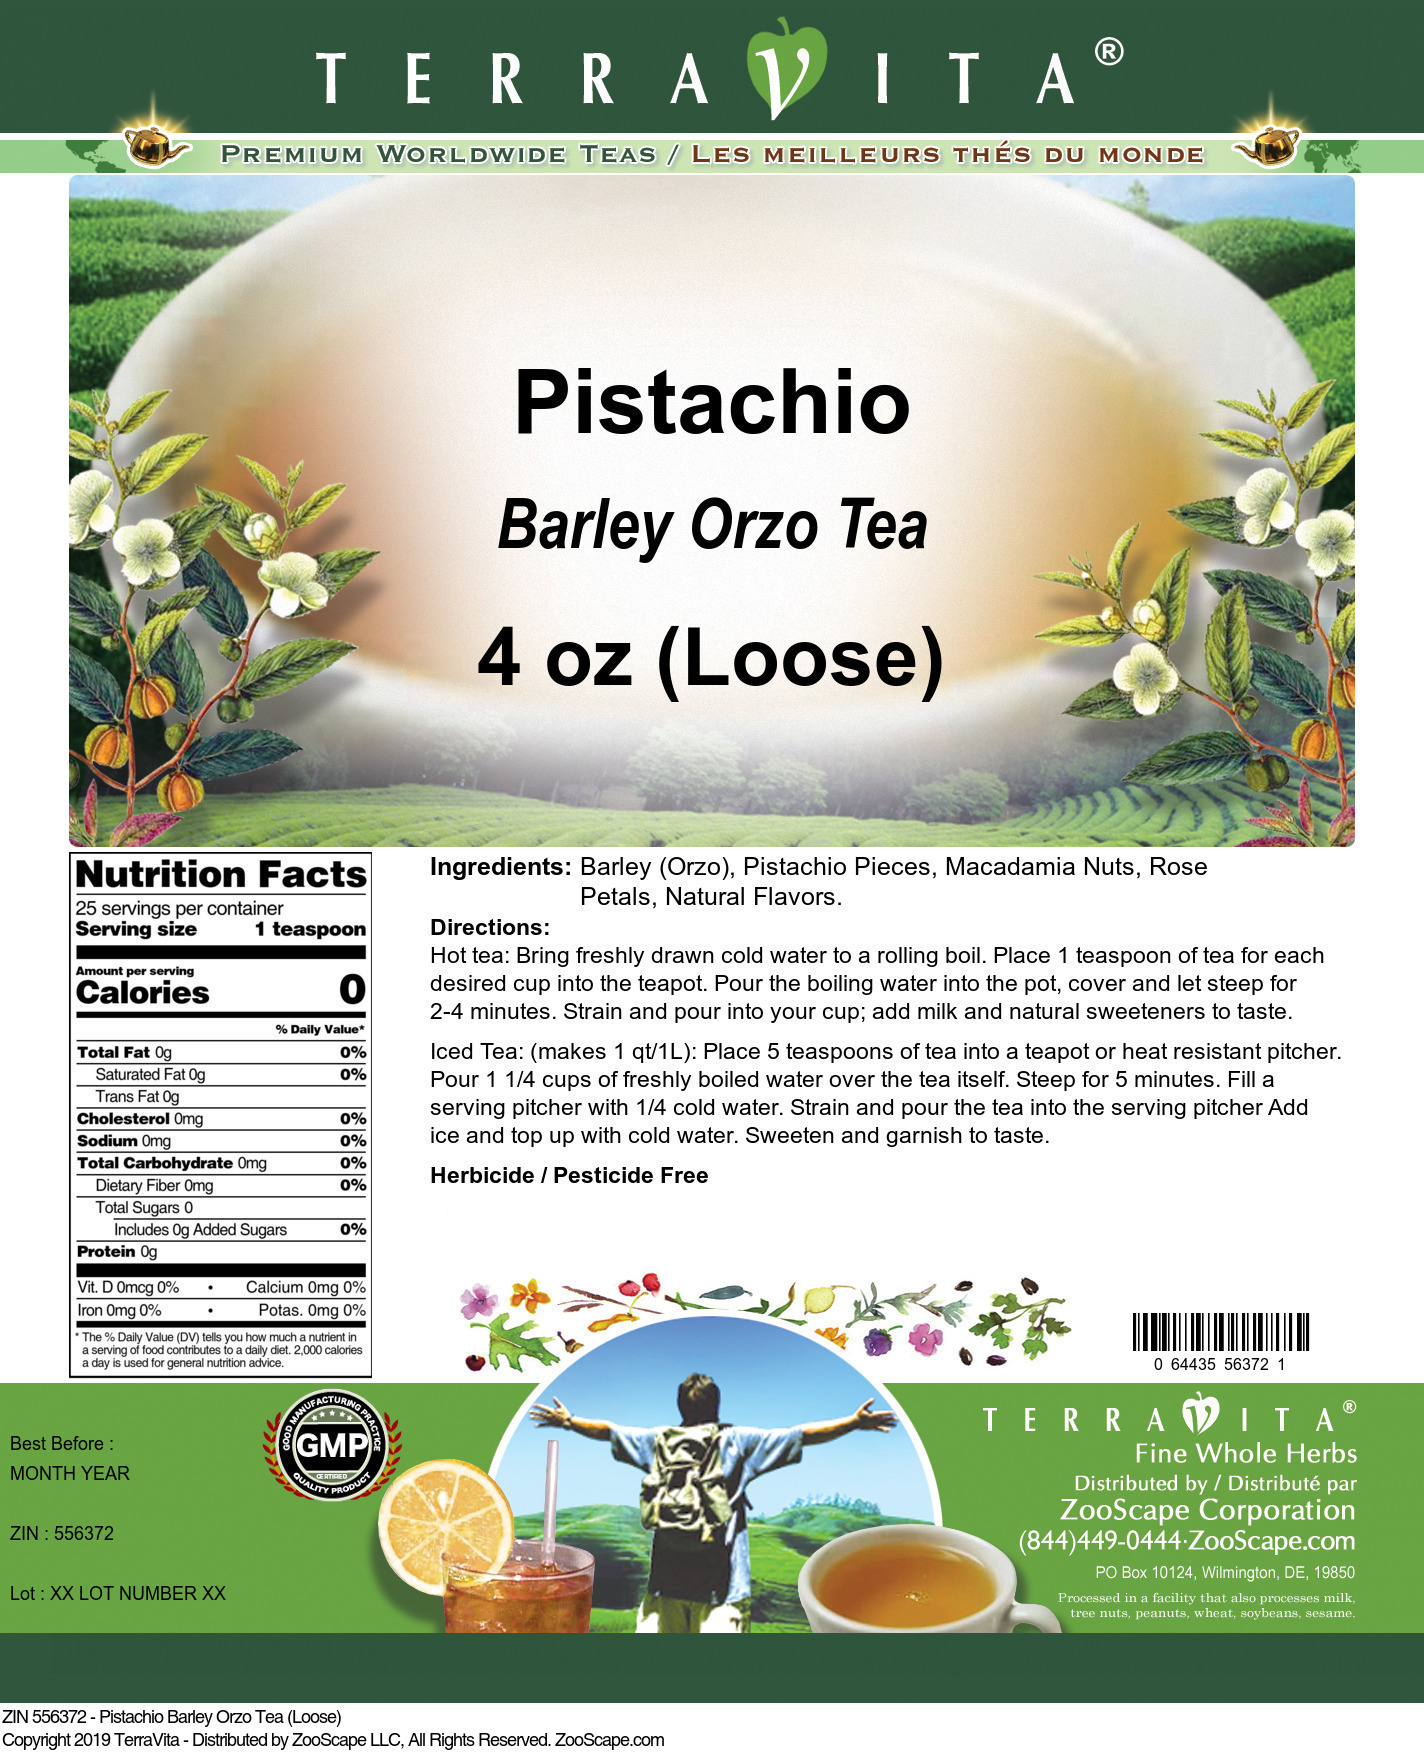 Pistachio Barley Orzo Tea (Loose) - Label